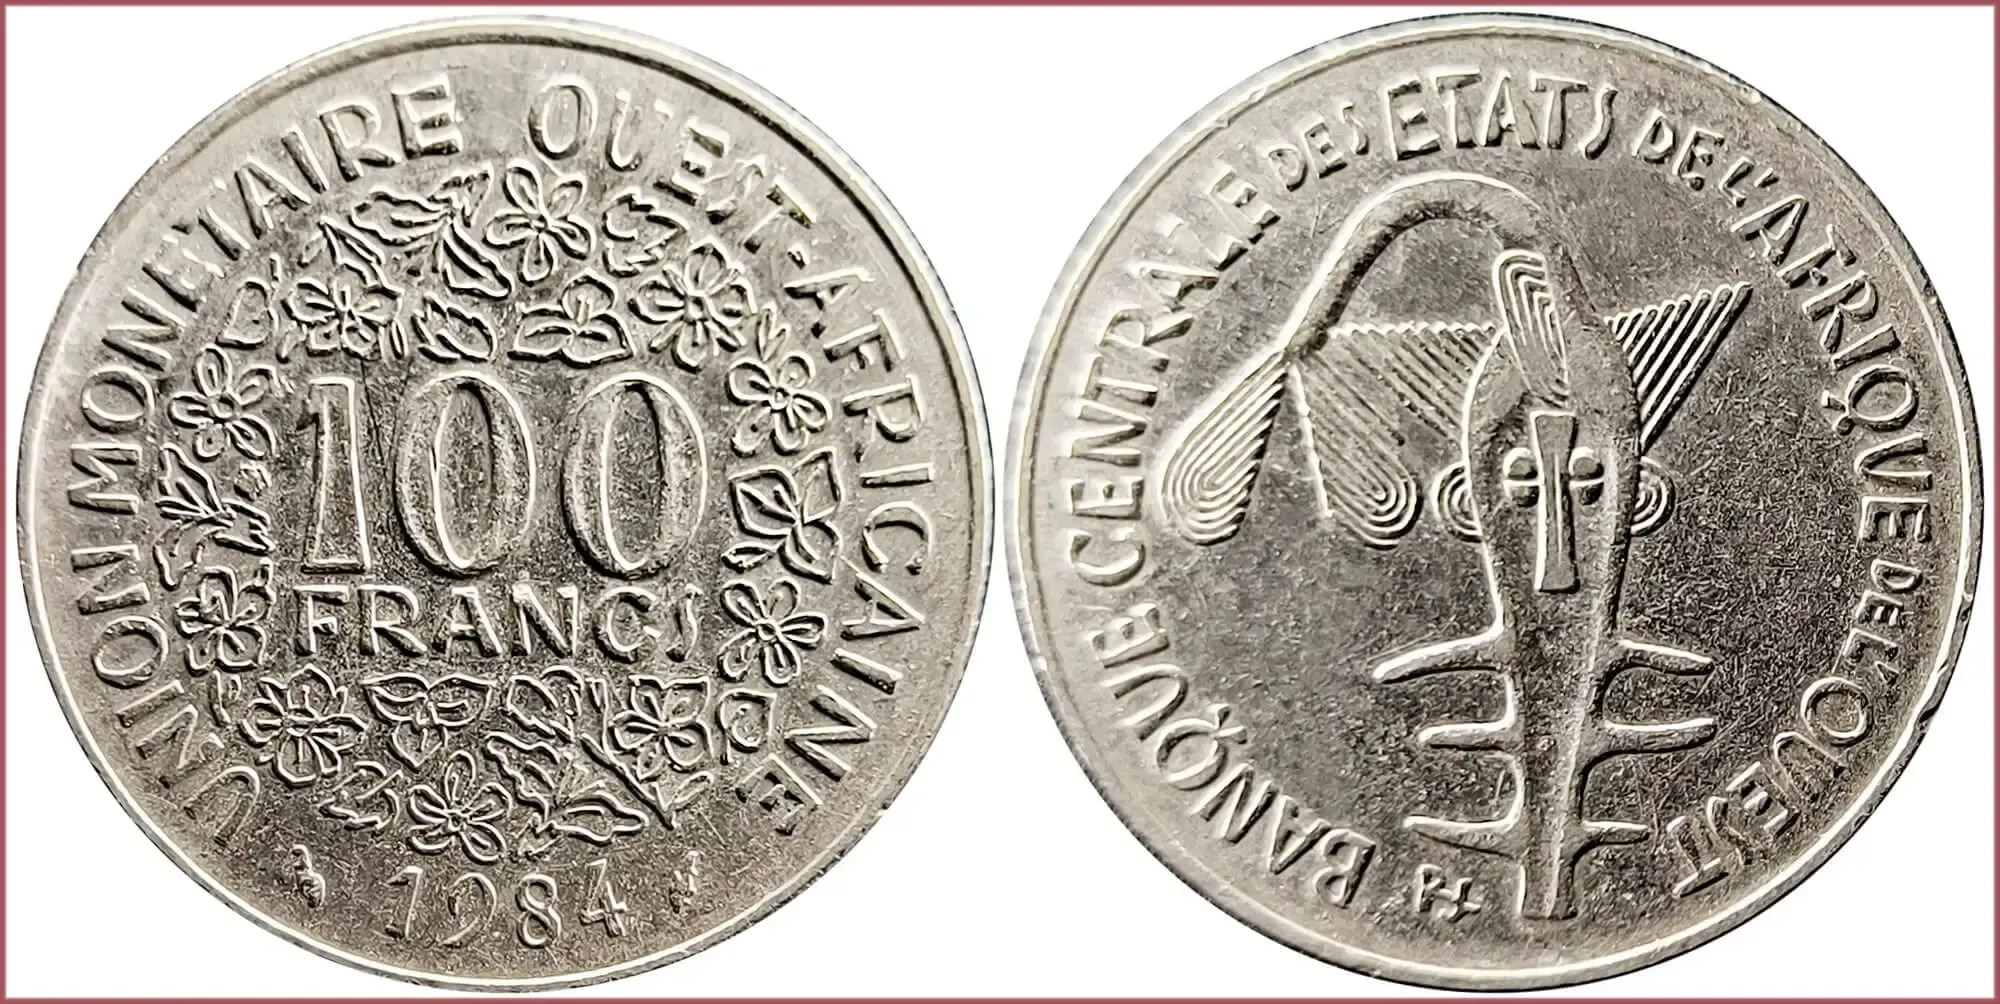 100 CFA franc, 1984: Economic Community of West African States